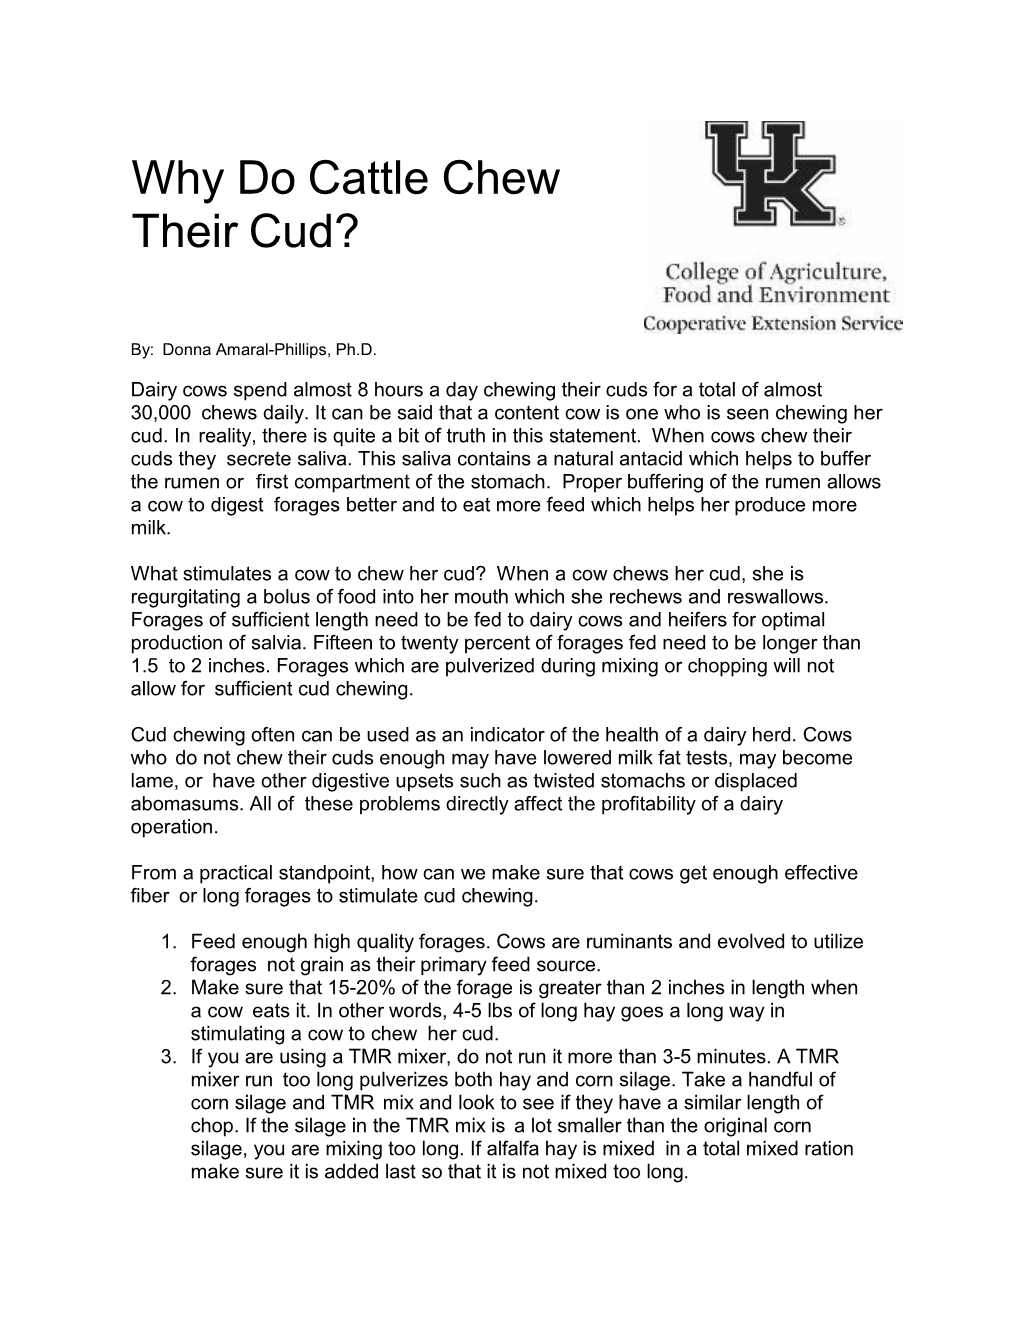 Why Do Cattle Chew Their Cud?